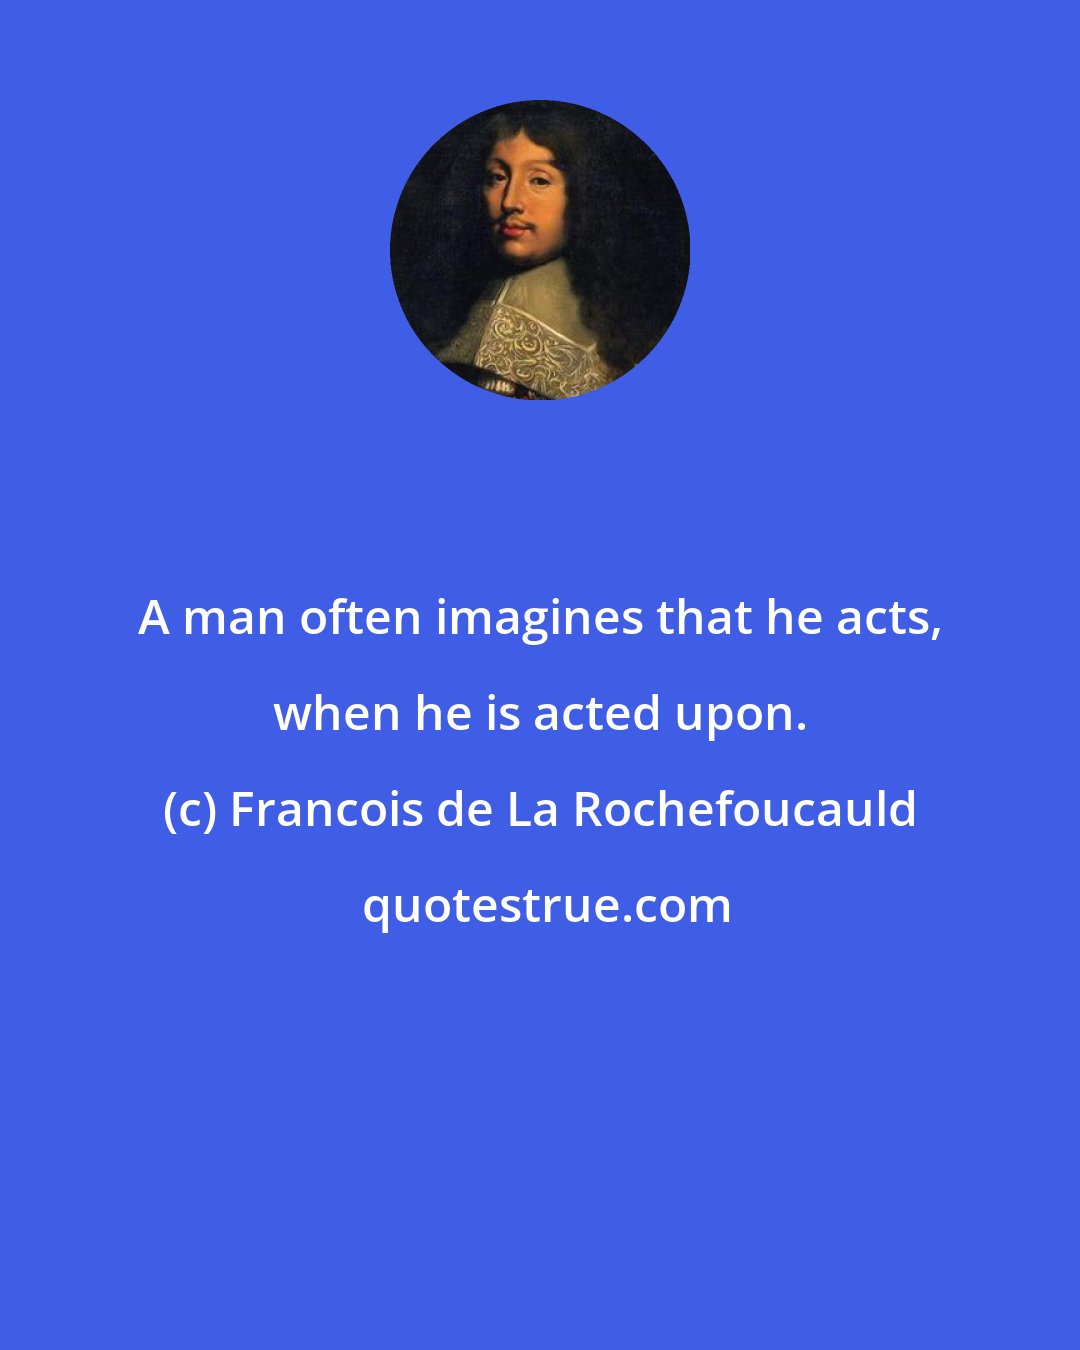 Francois de La Rochefoucauld: A man often imagines that he acts, when he is acted upon.